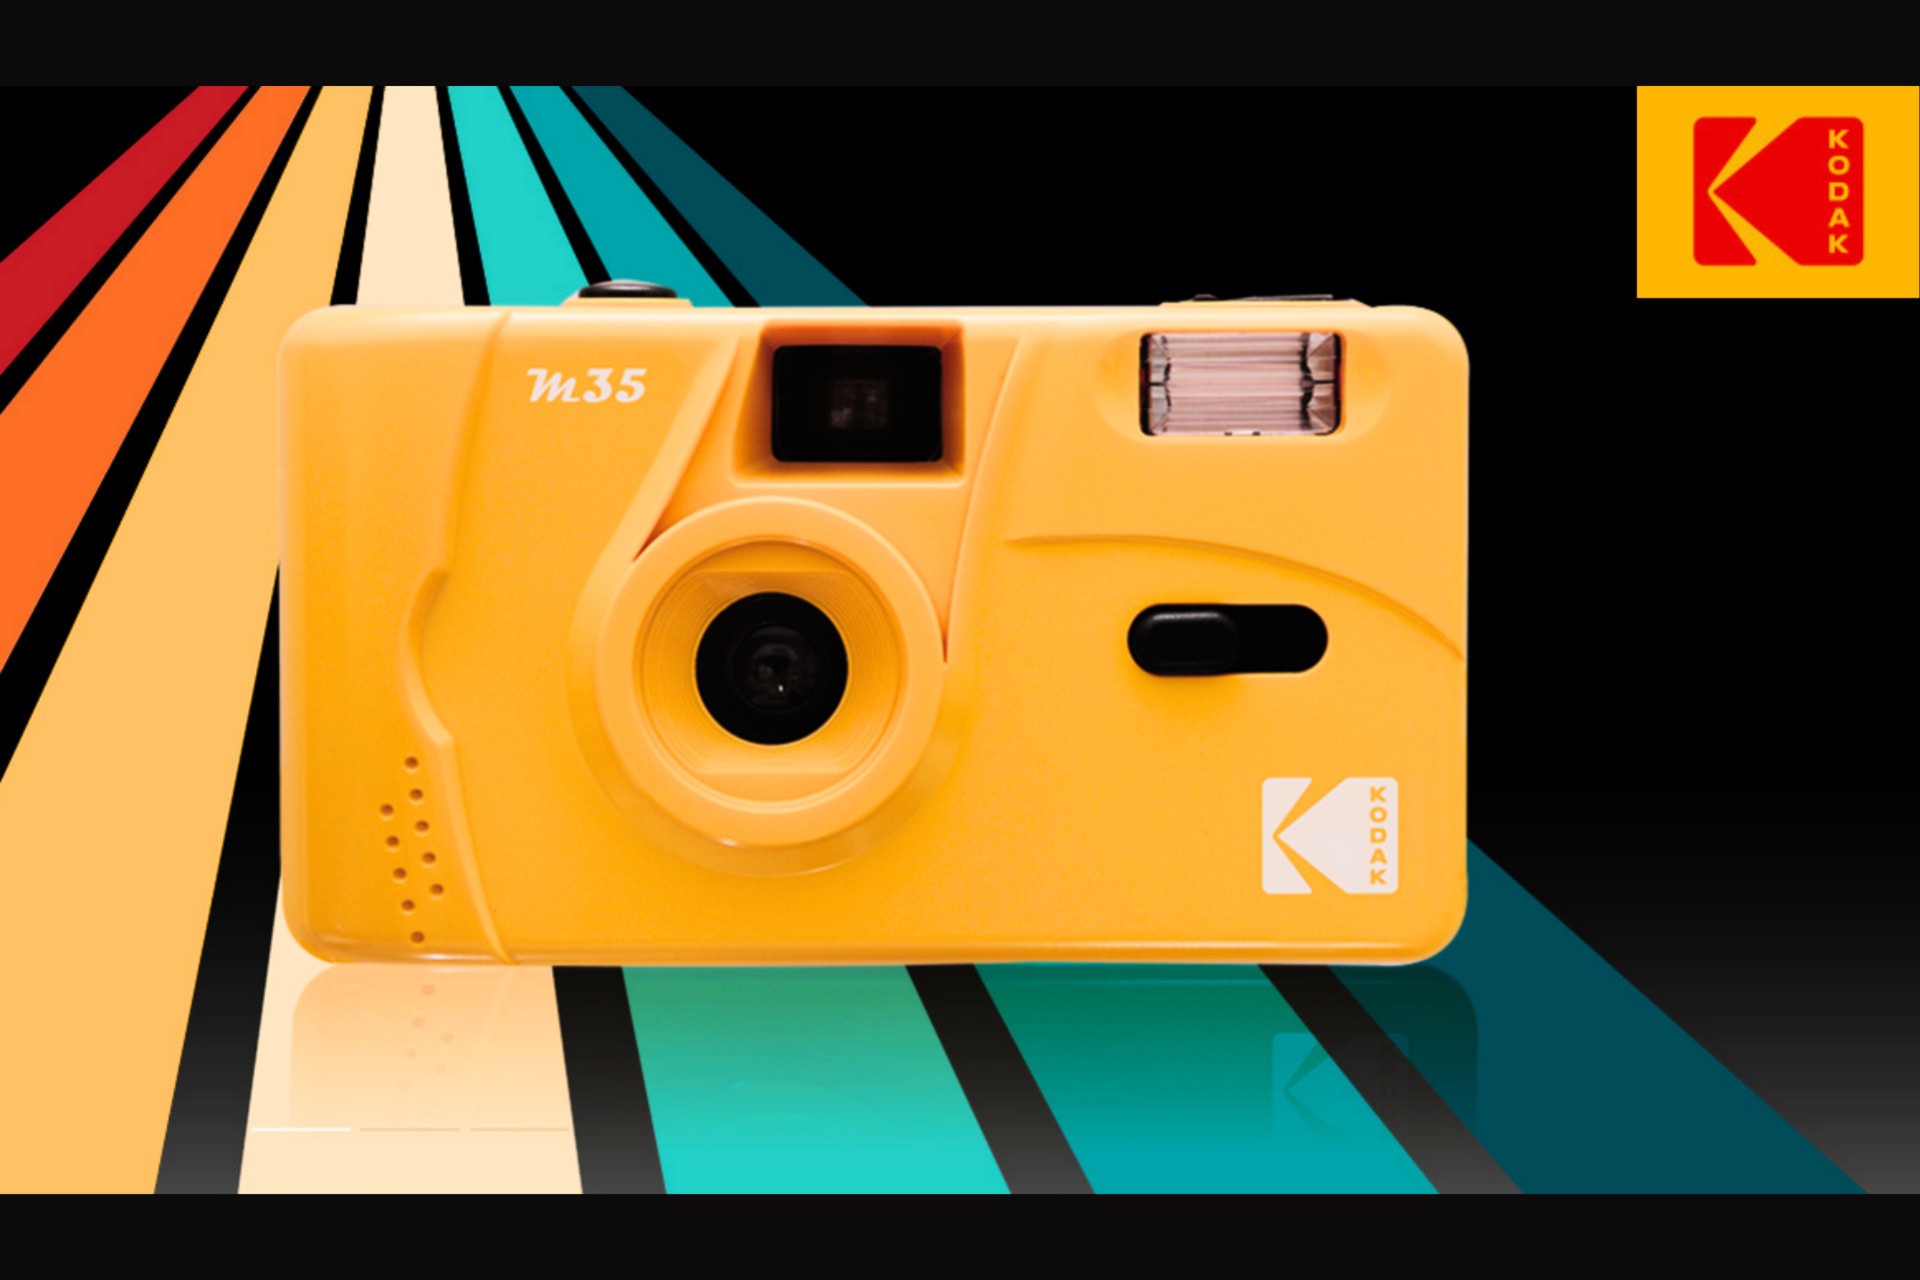 Appareil Kodak M38